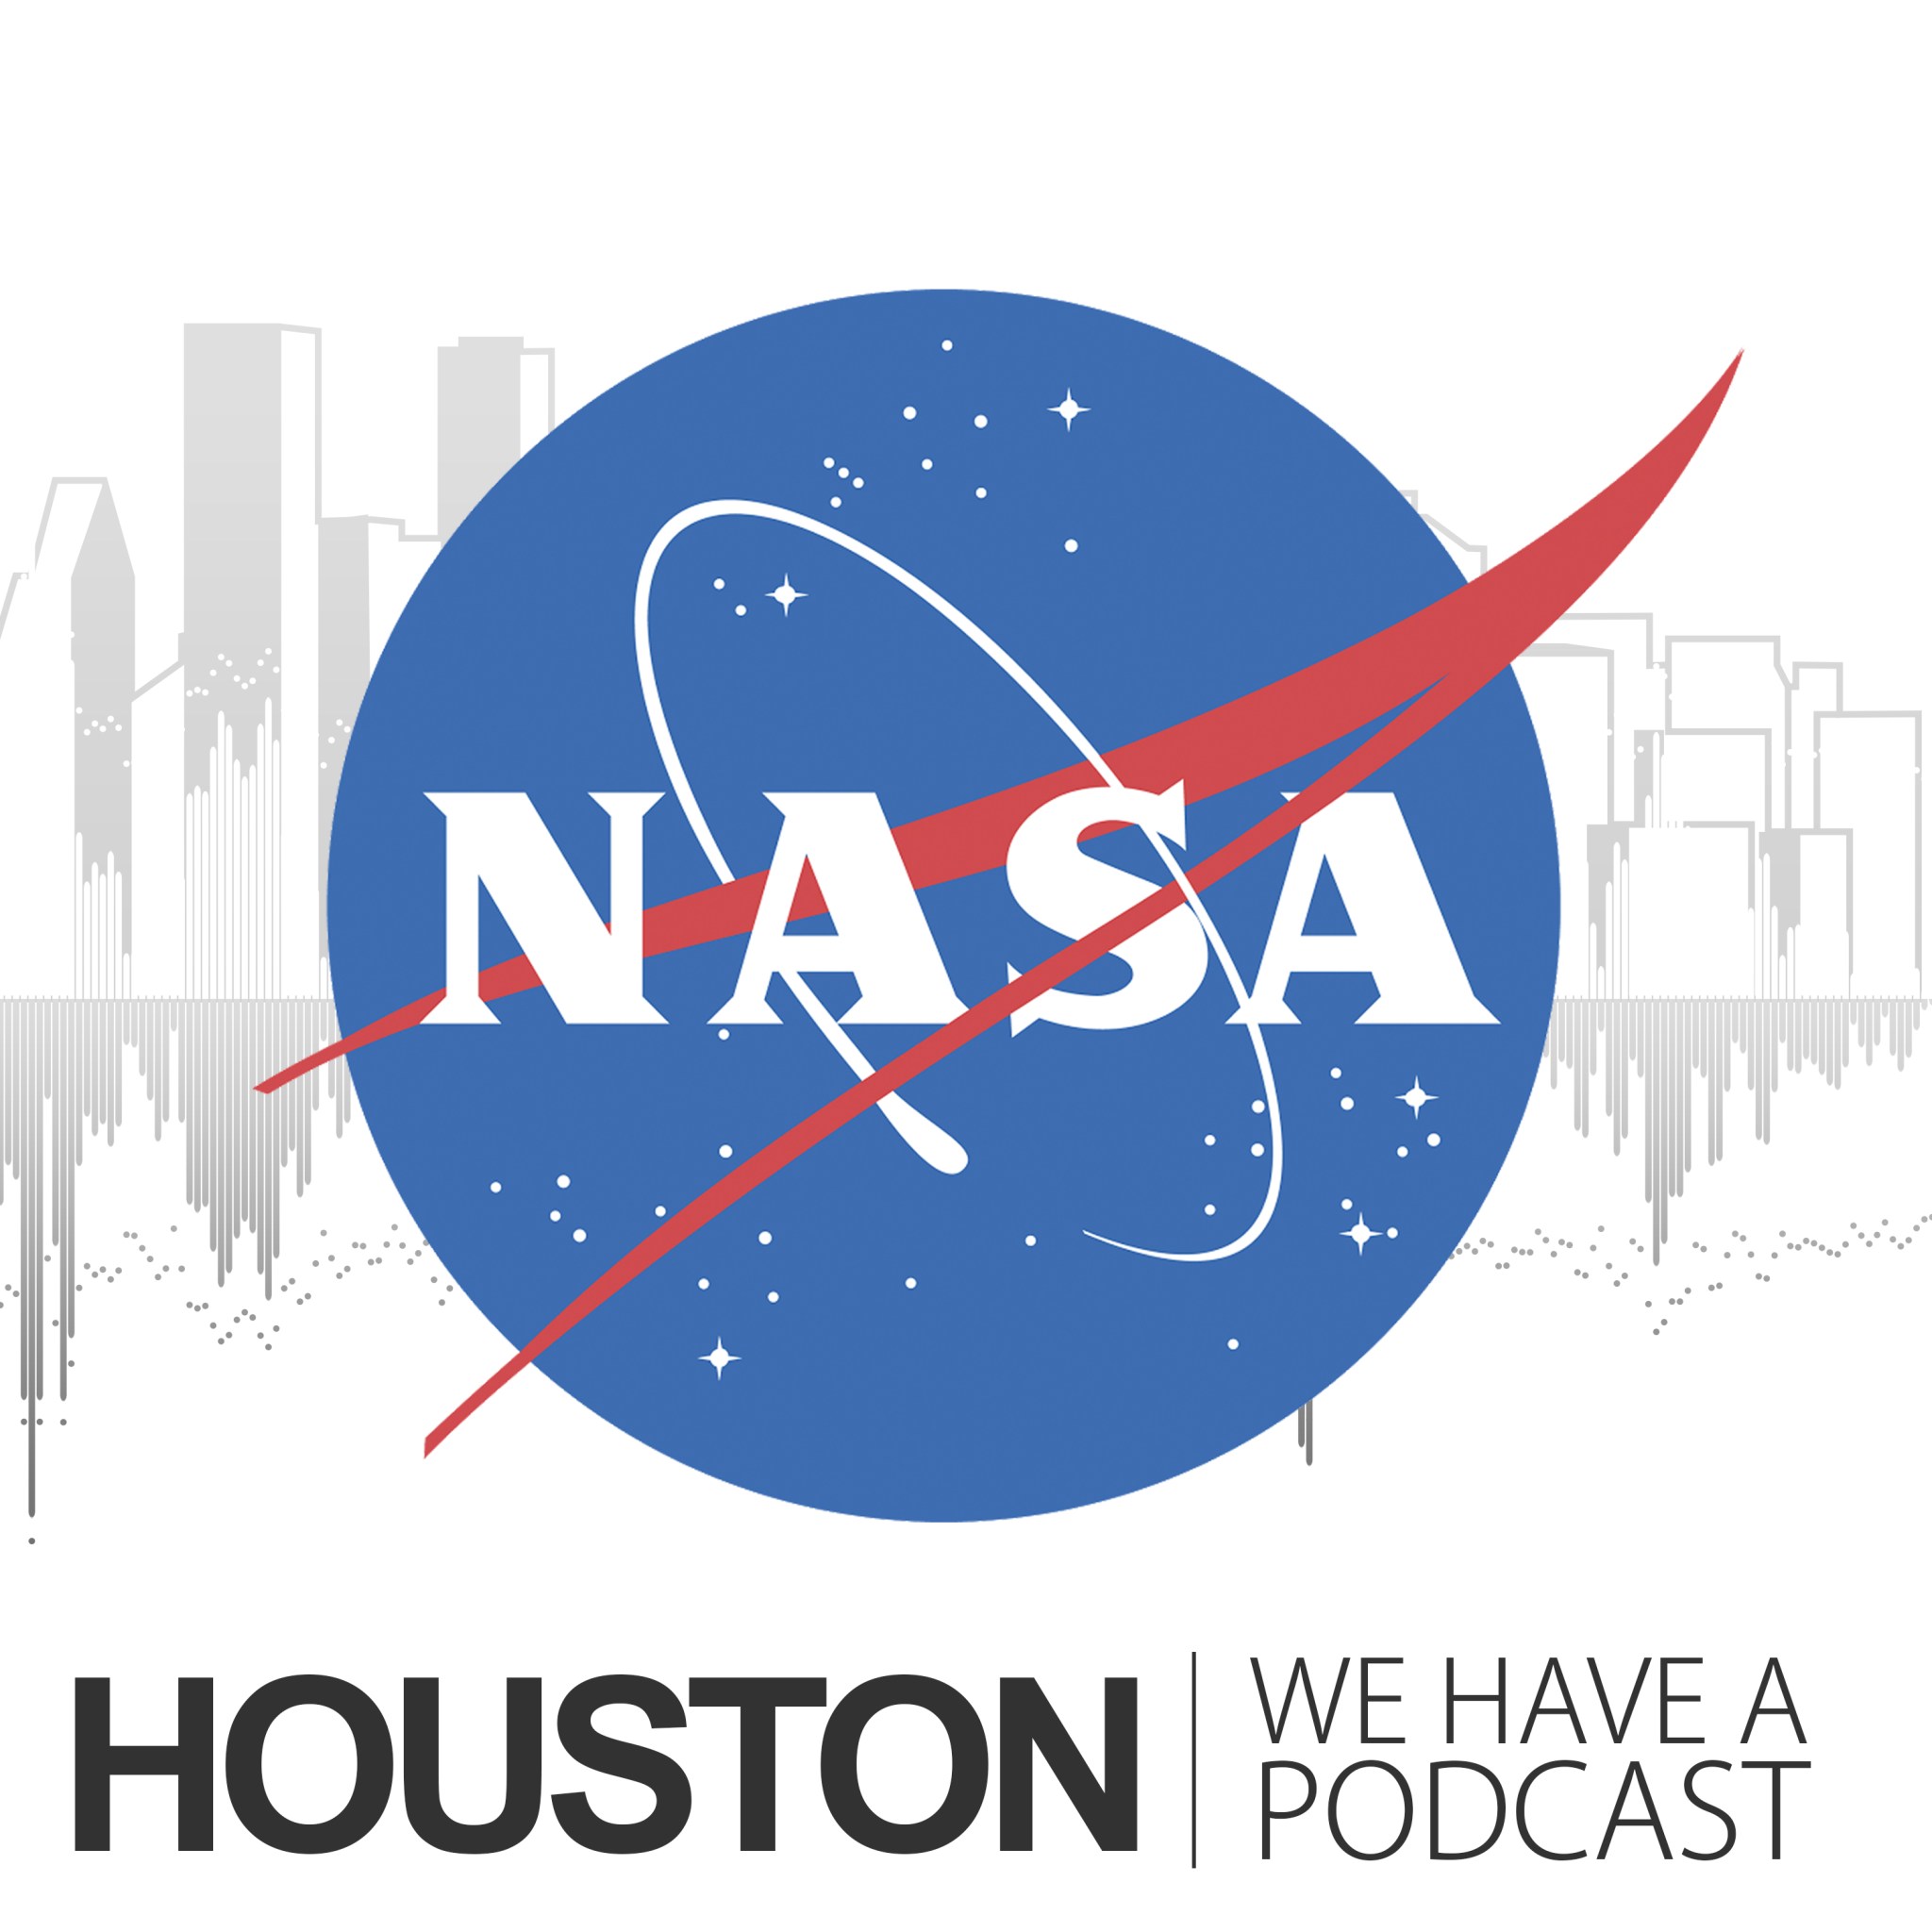 Houston Podcast